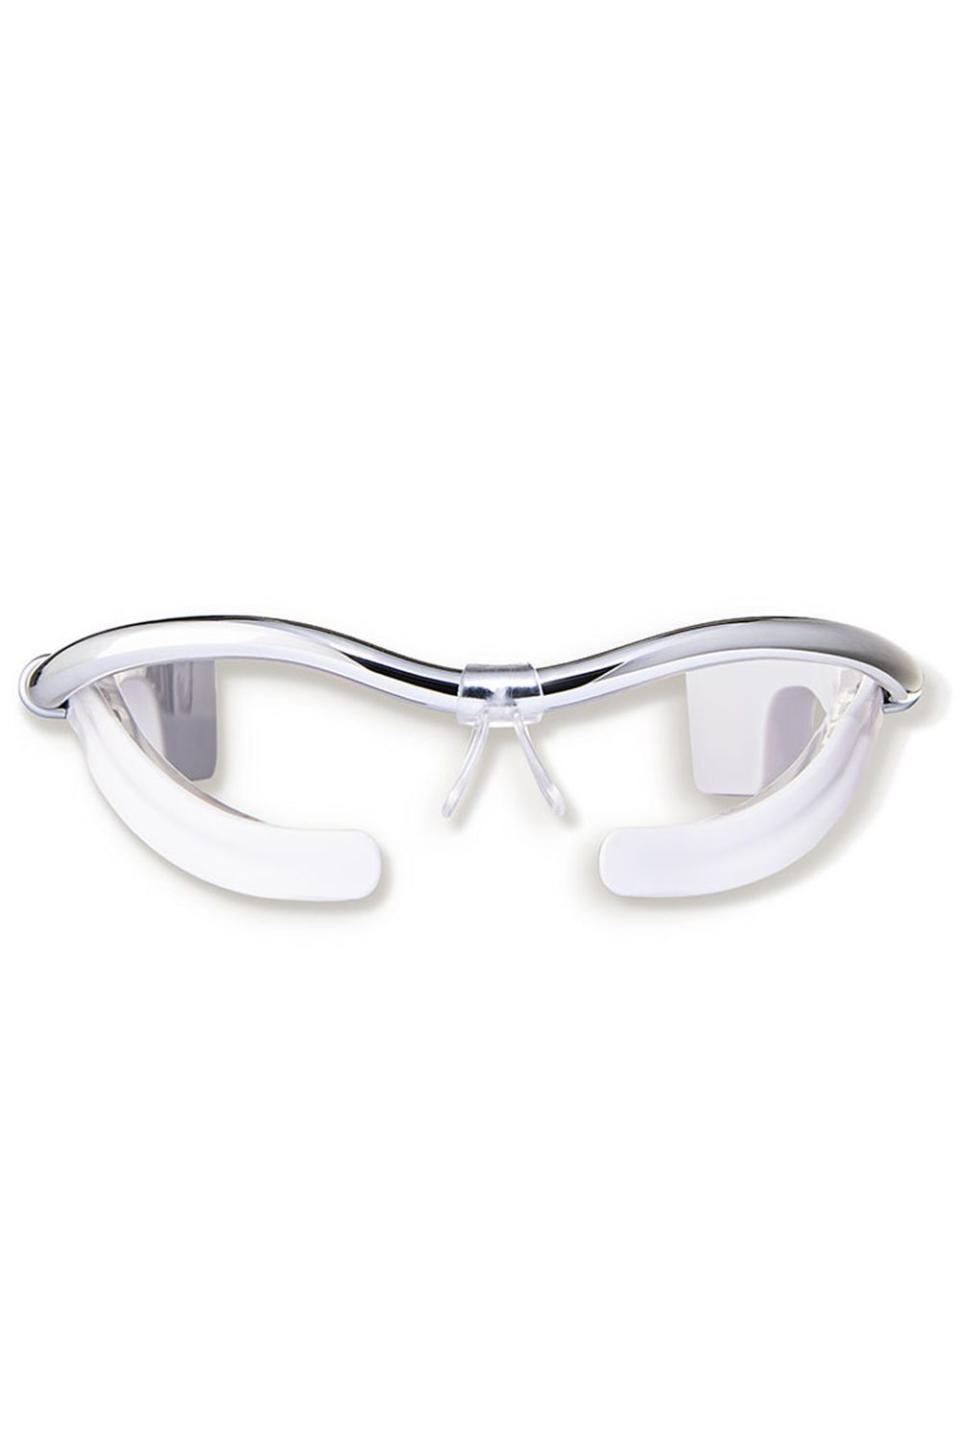 6) Skin Inc. Optimizer Voyage Glasses